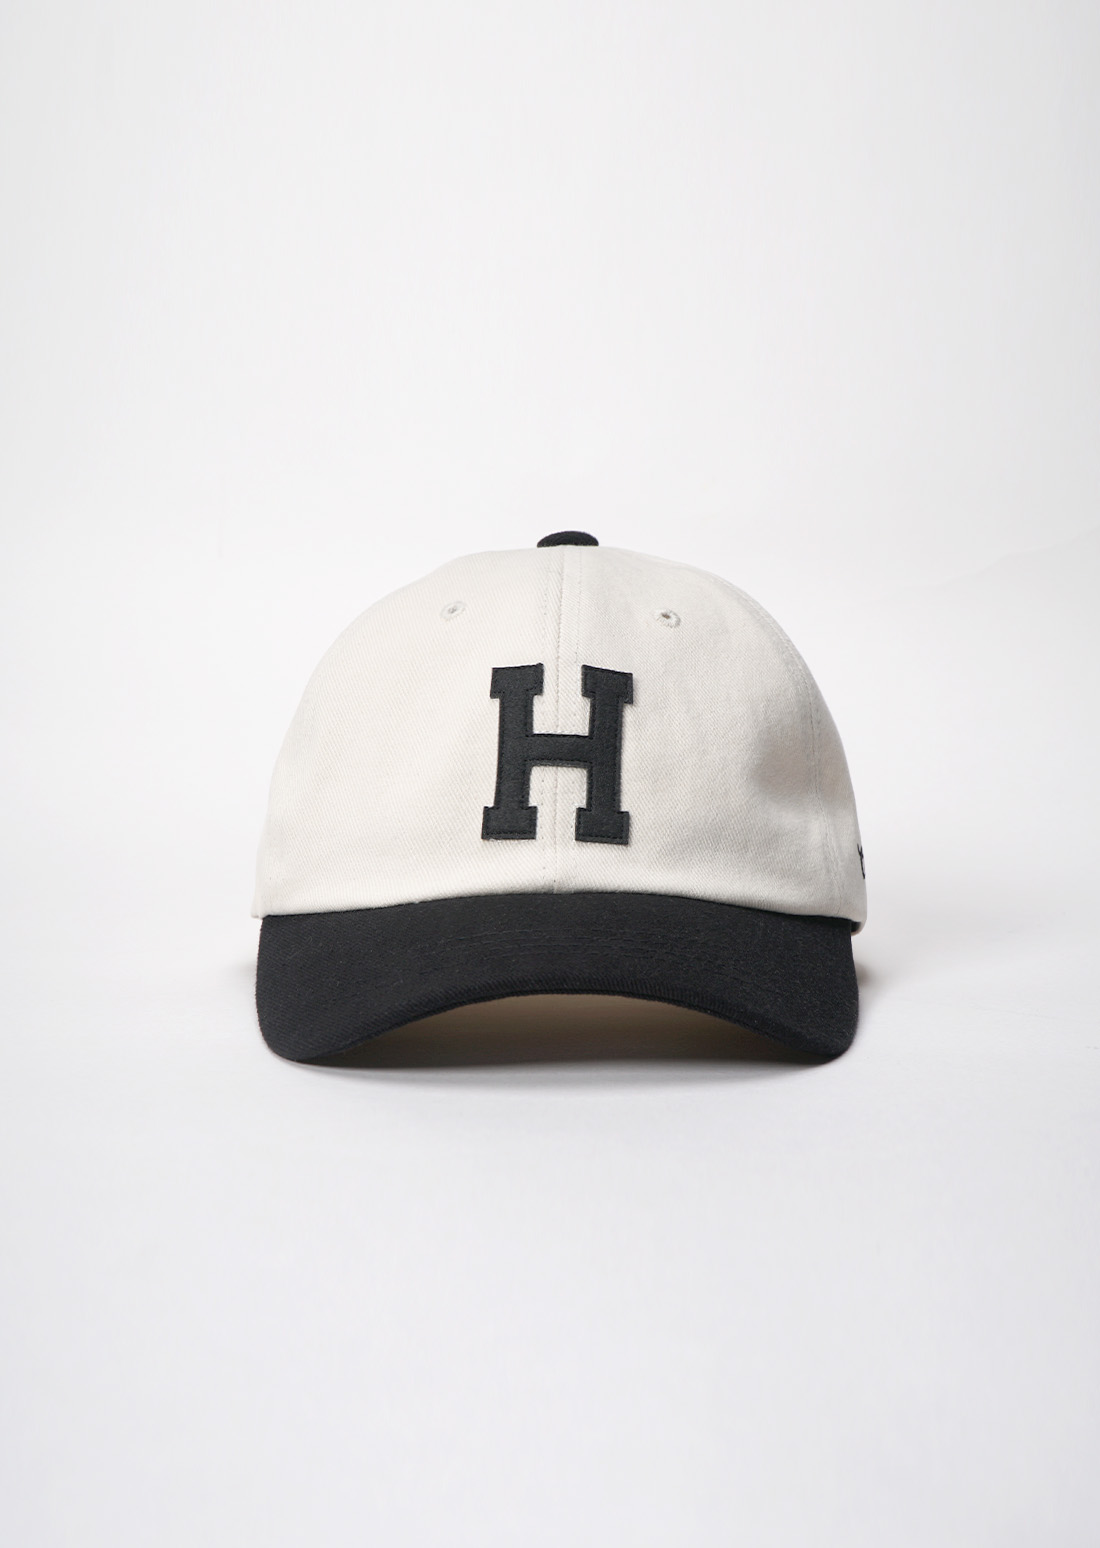 H logo ball cap(Black)